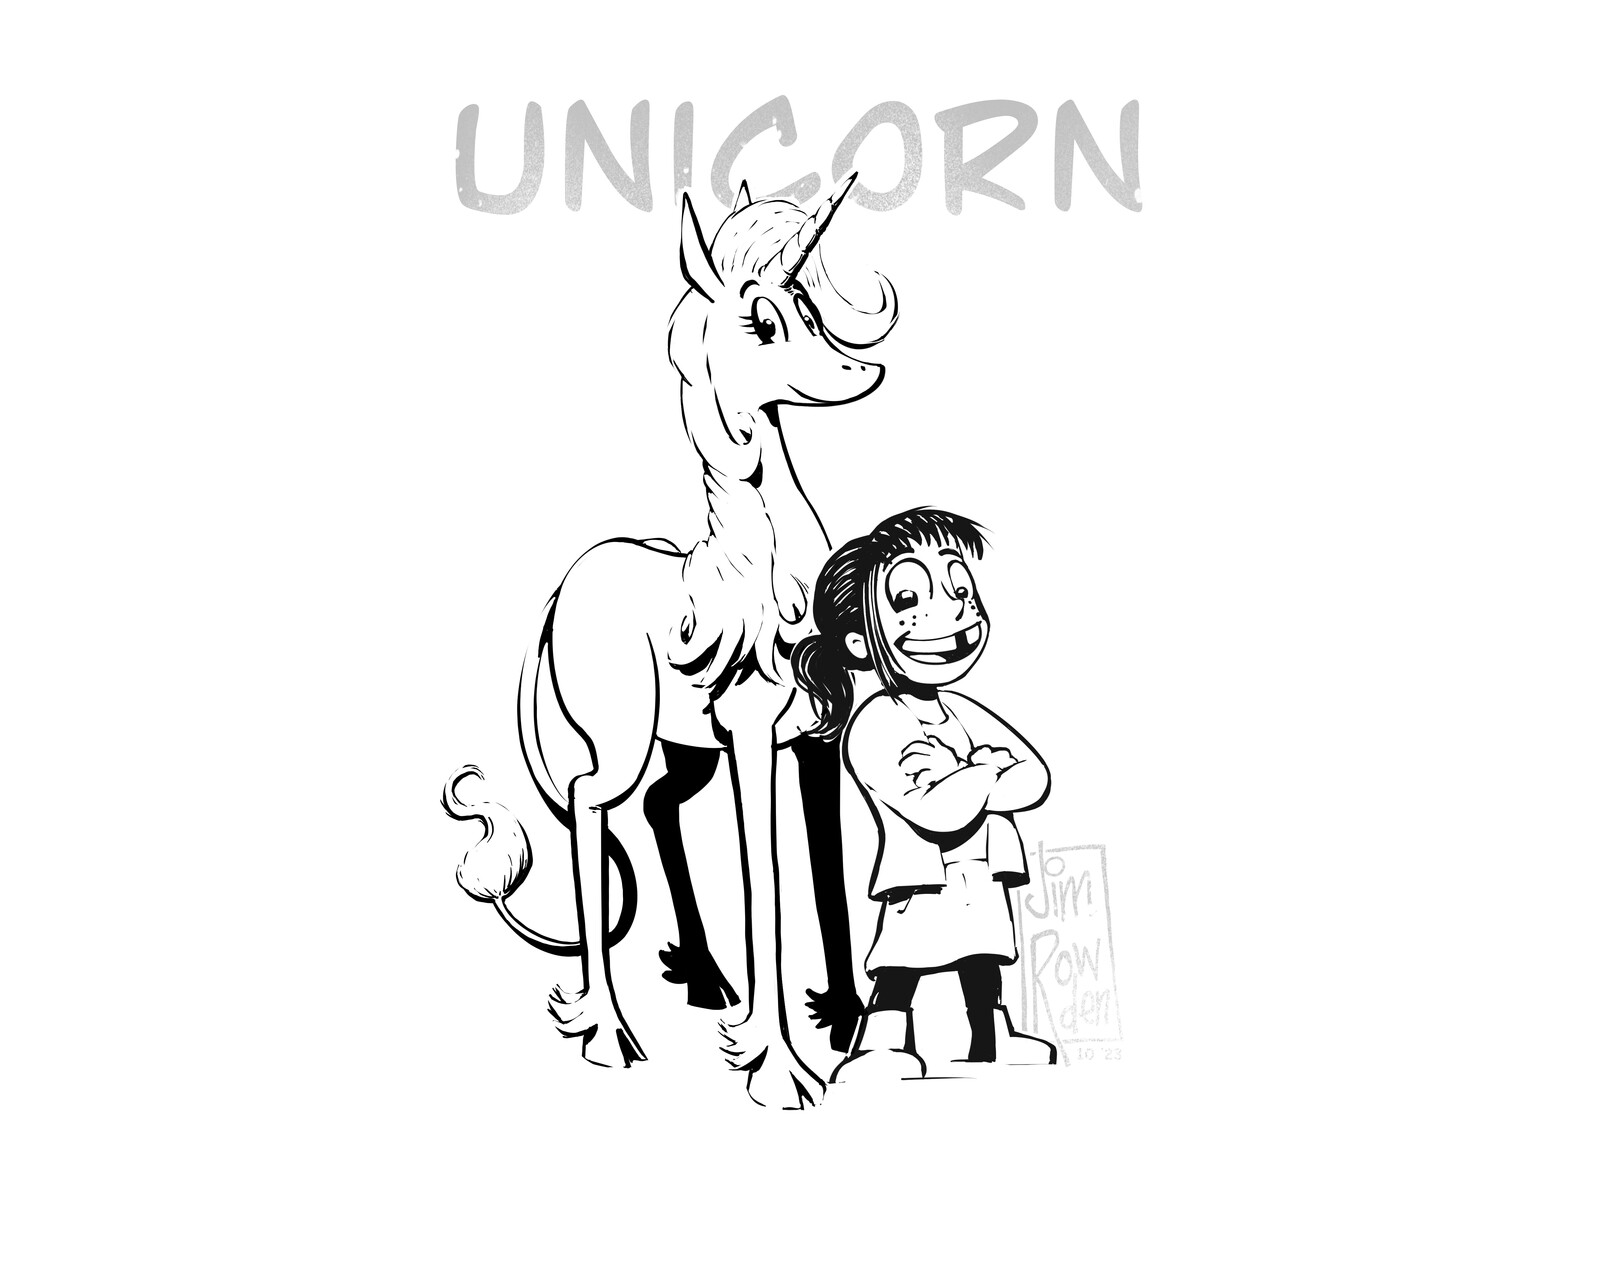 Phoebe and Her Unicorn (fan art)